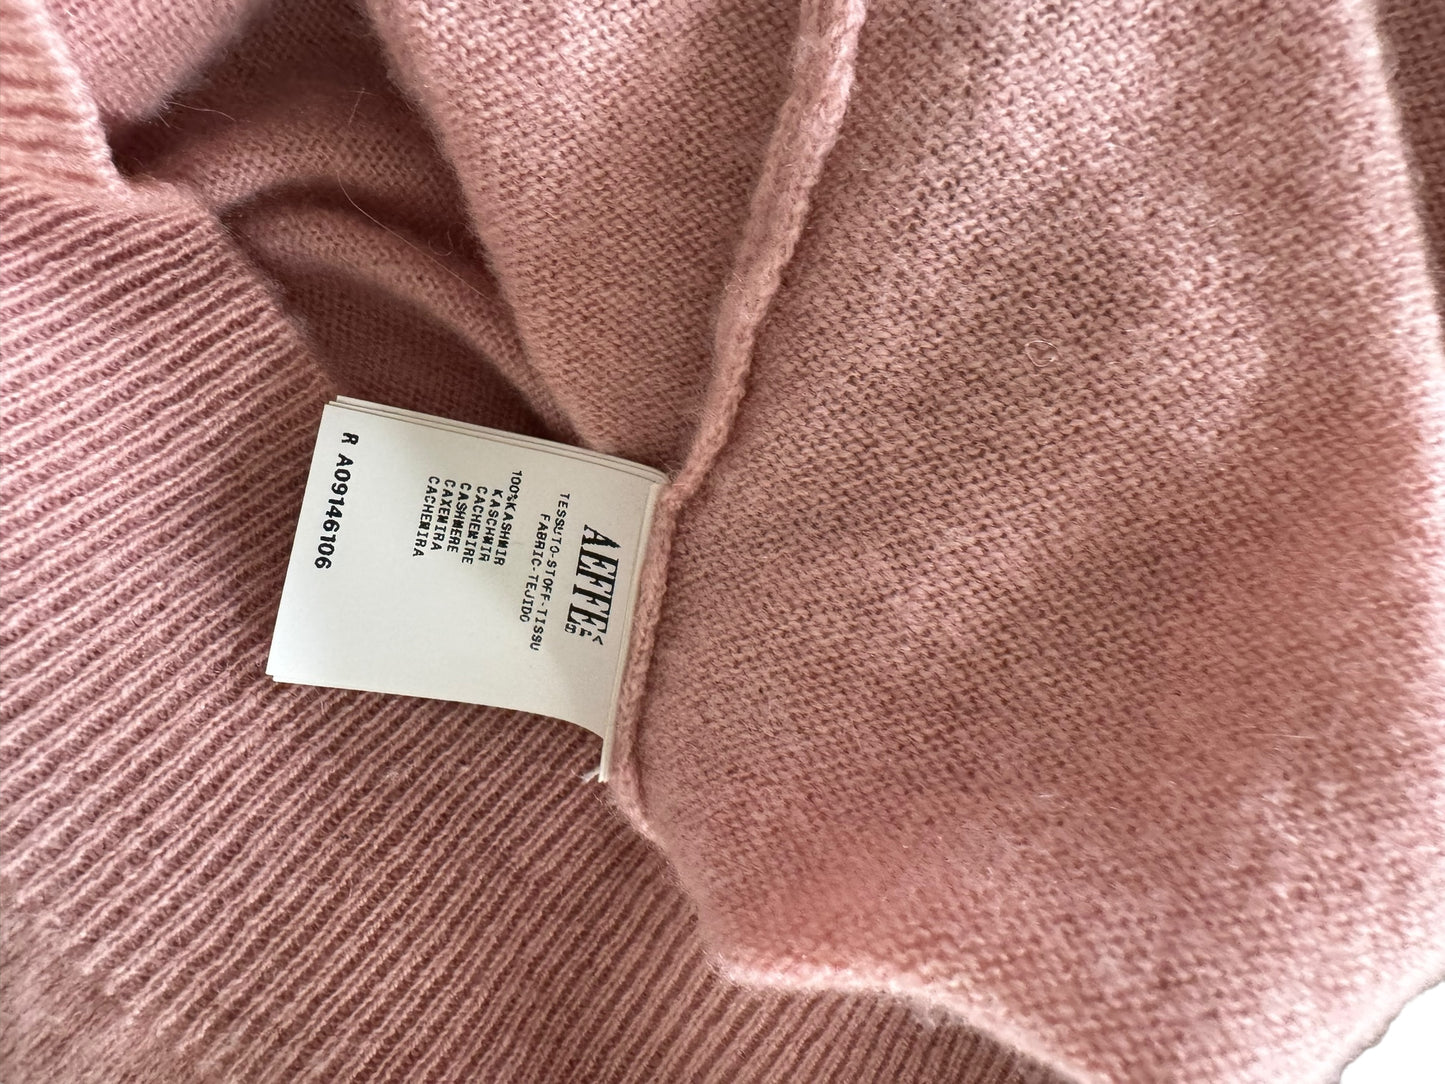 MOSCHINO ciao Bella pink sweater size small